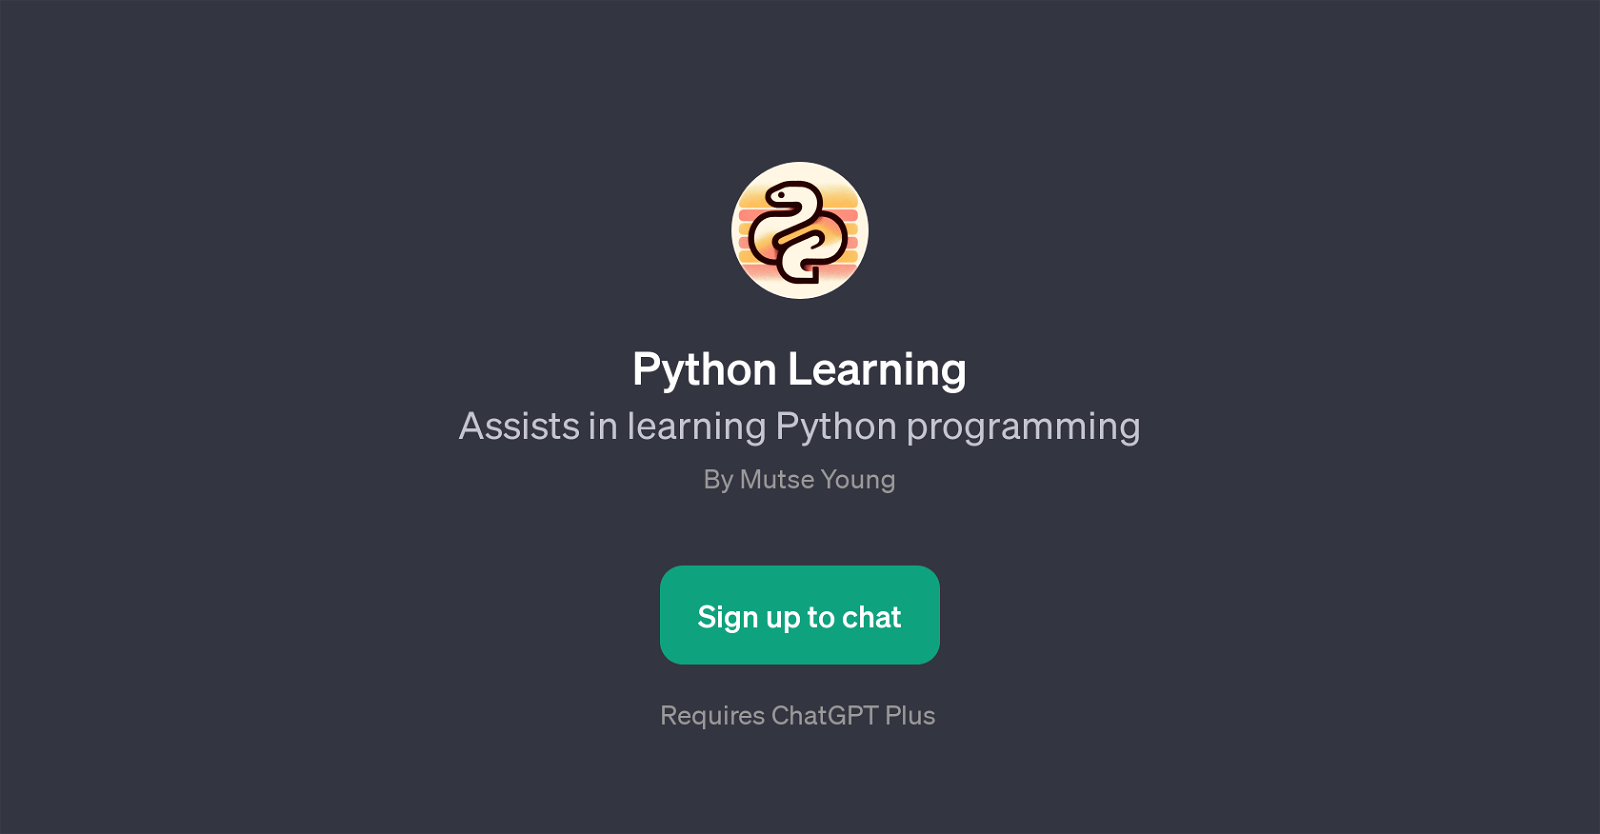 Python Learning website